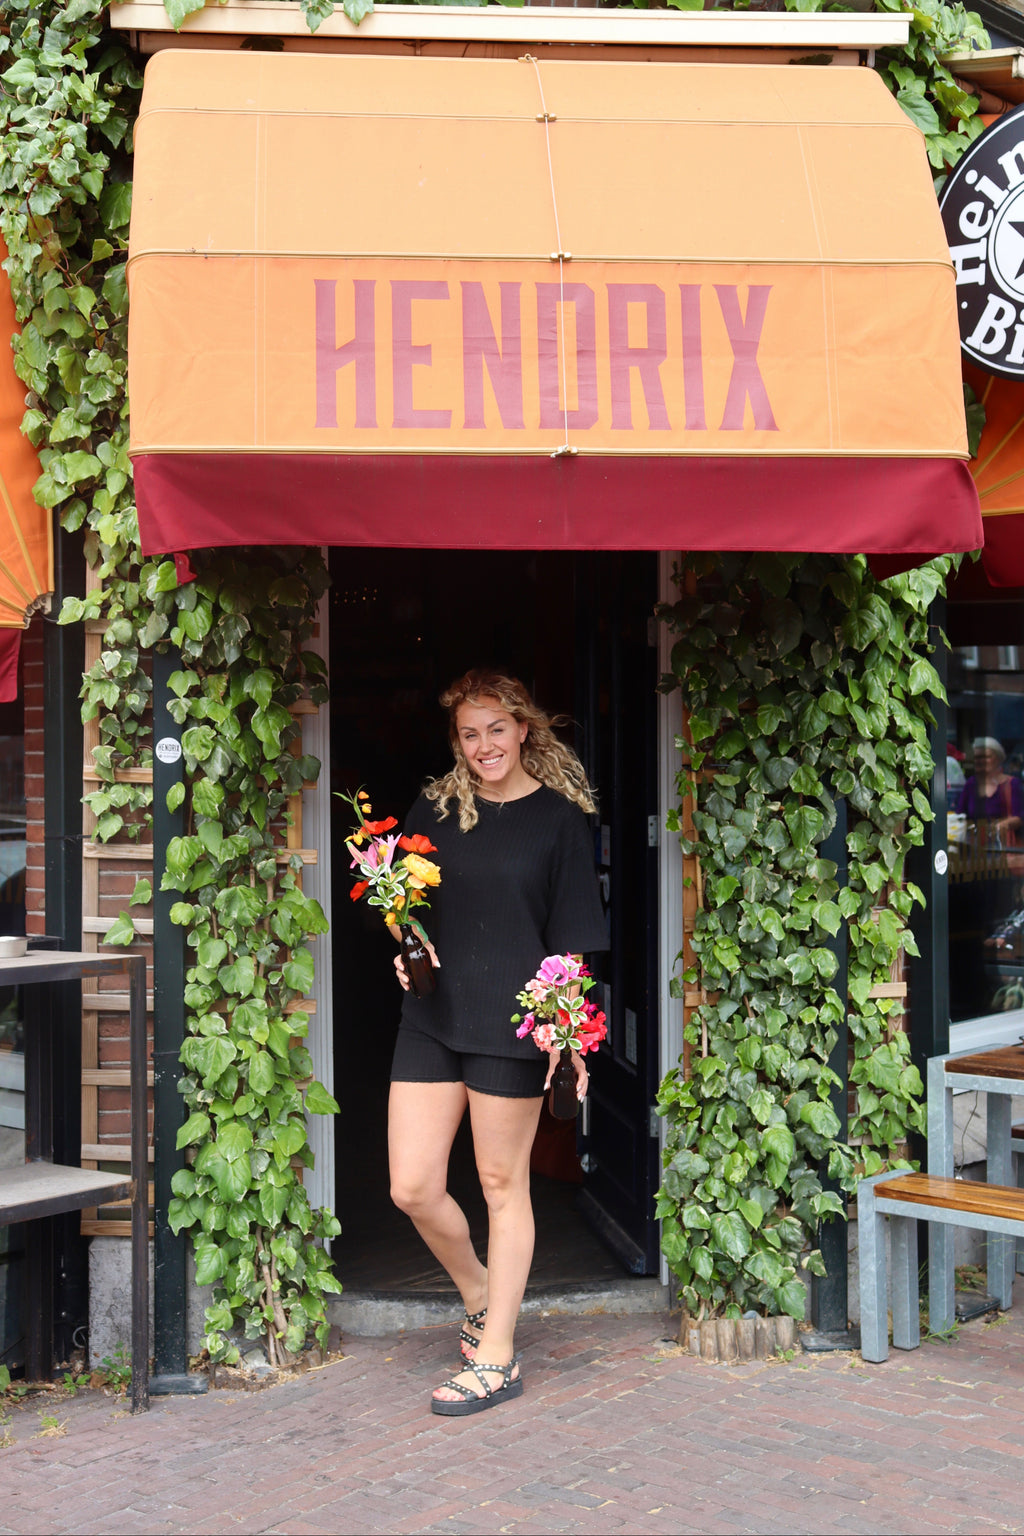 Hendrix - Restaurant styling